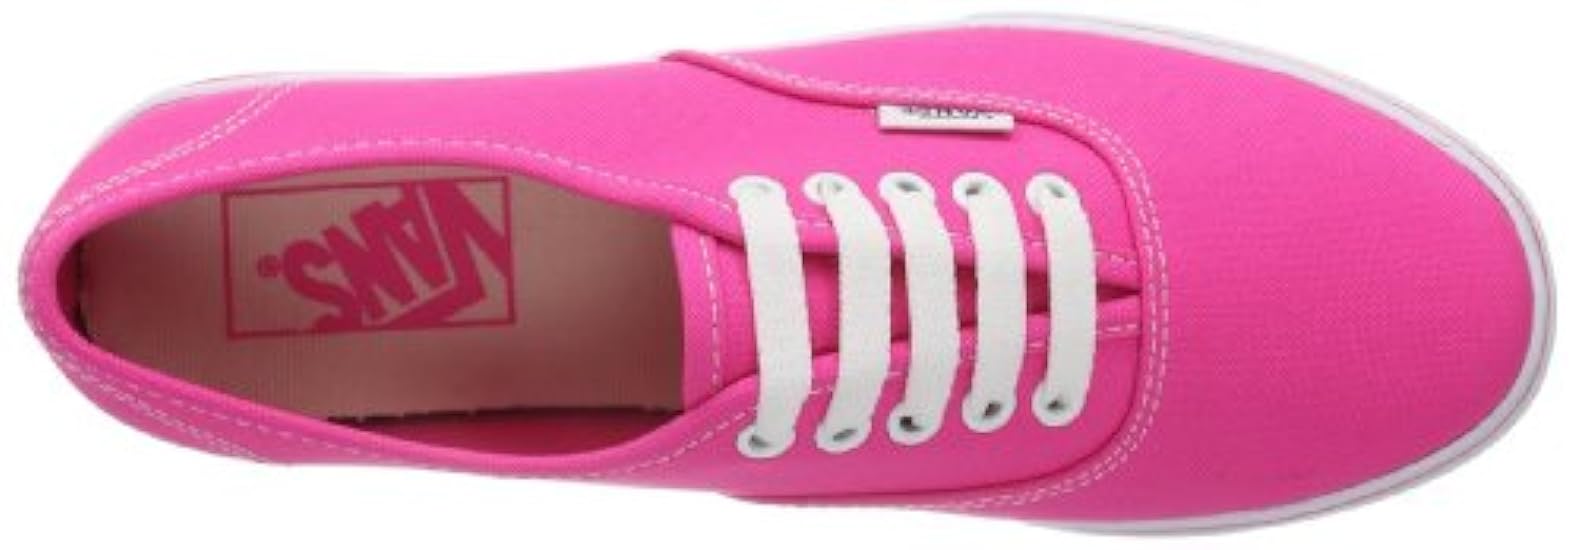 Vans U Authentic Lo PRO (Neon) Pink GLO, Scarpe Sportive-Skateboard Unisex – Adulto 631946353